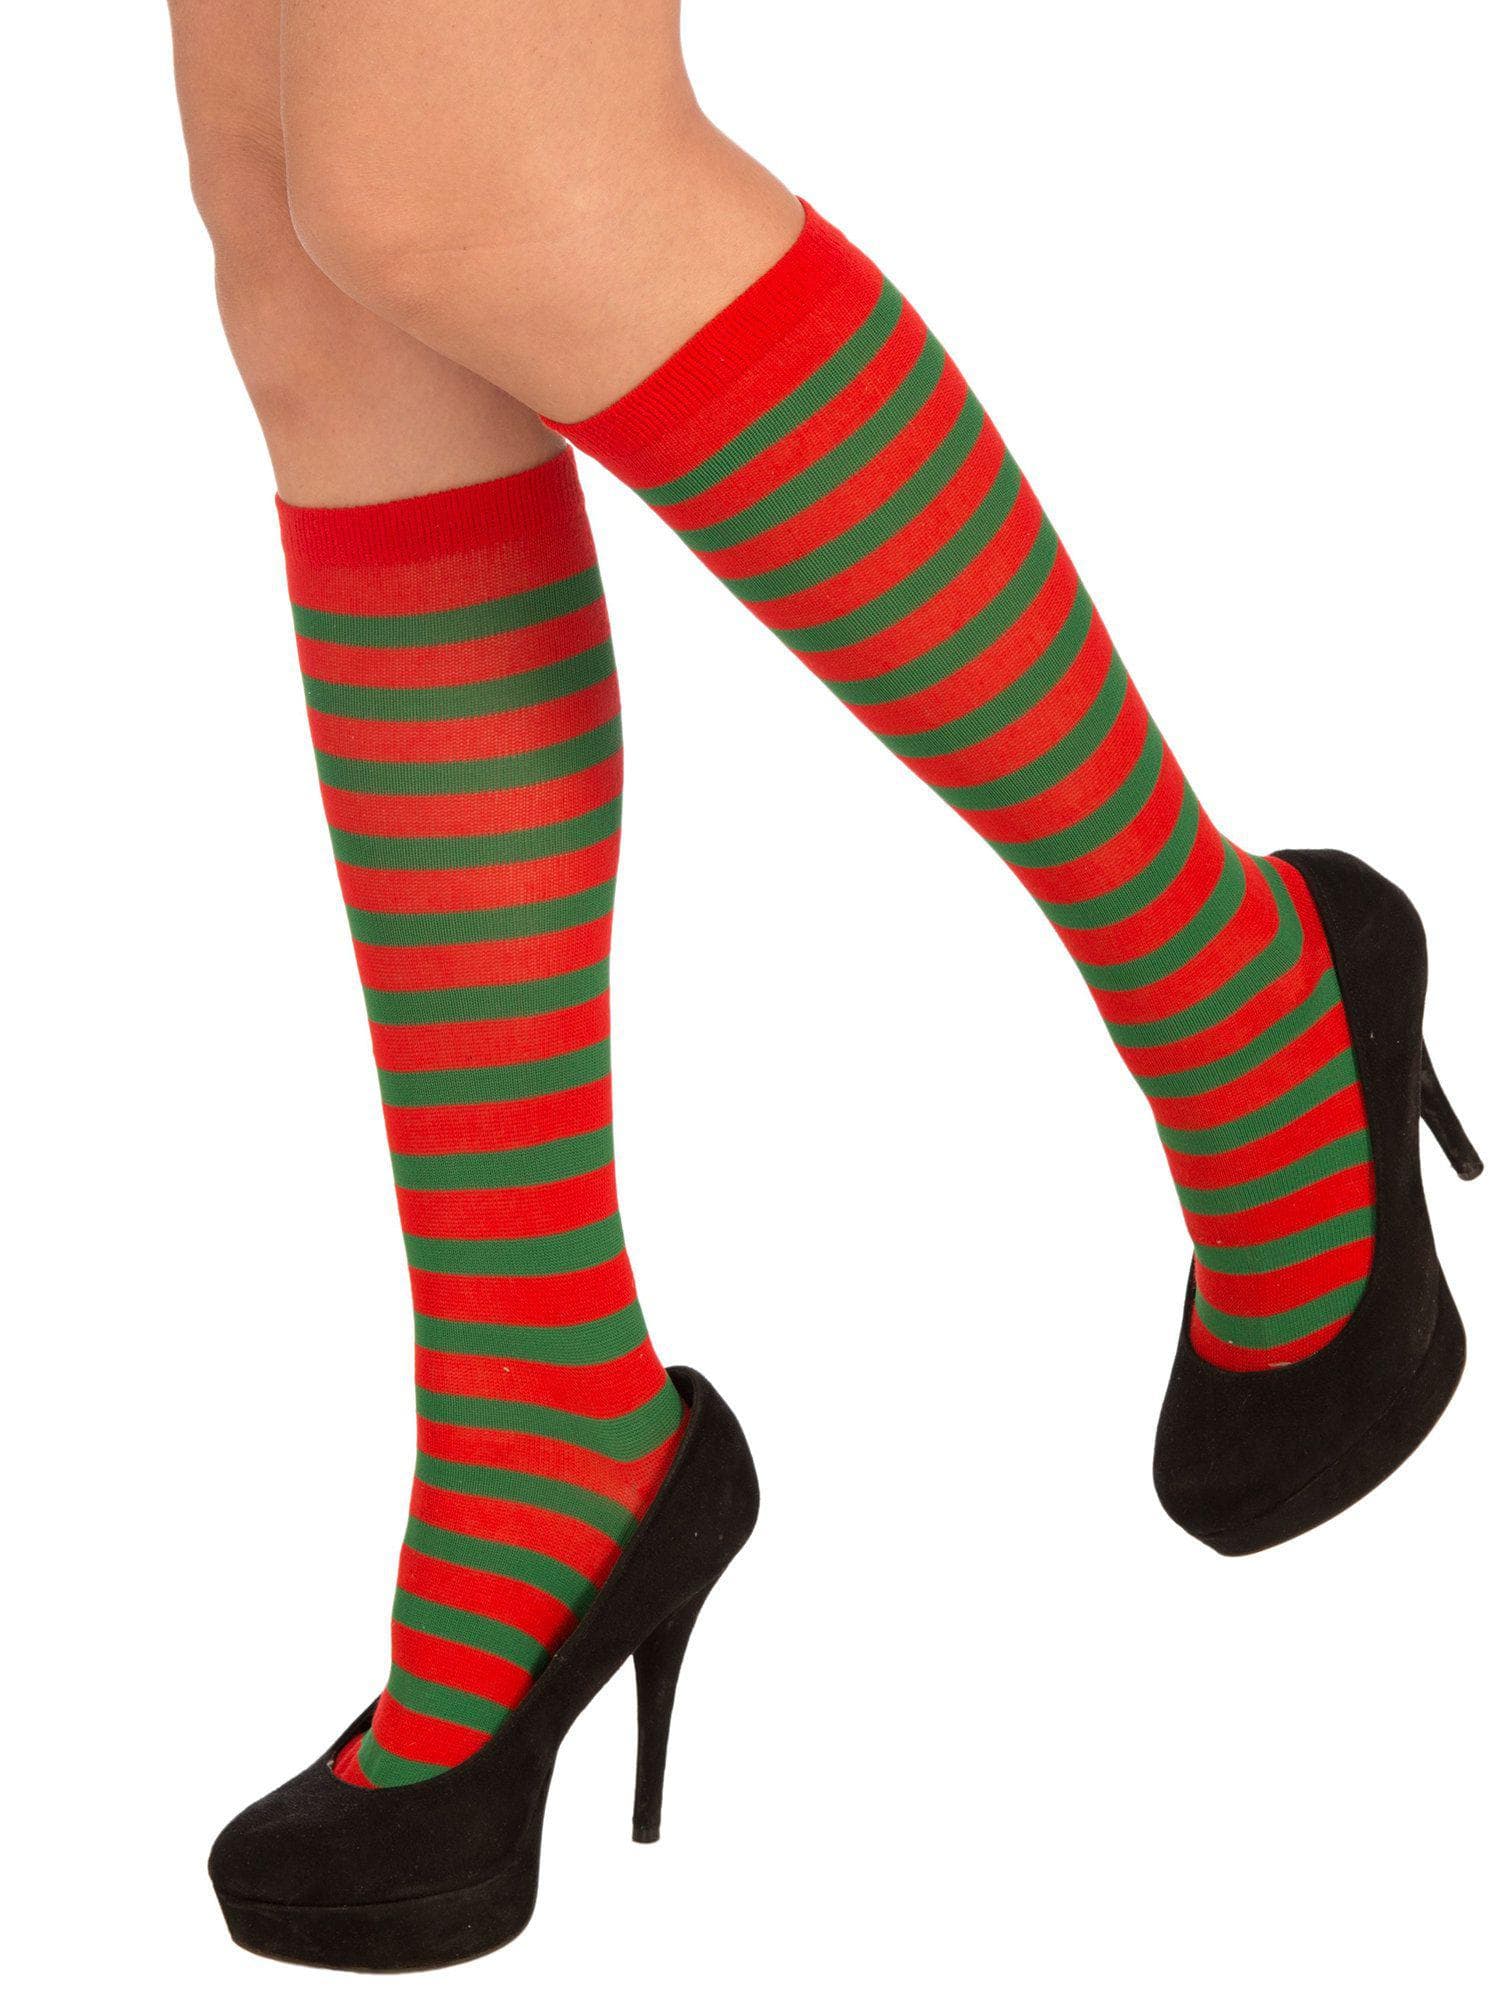 Green/Red Striped Socks - costumes.com